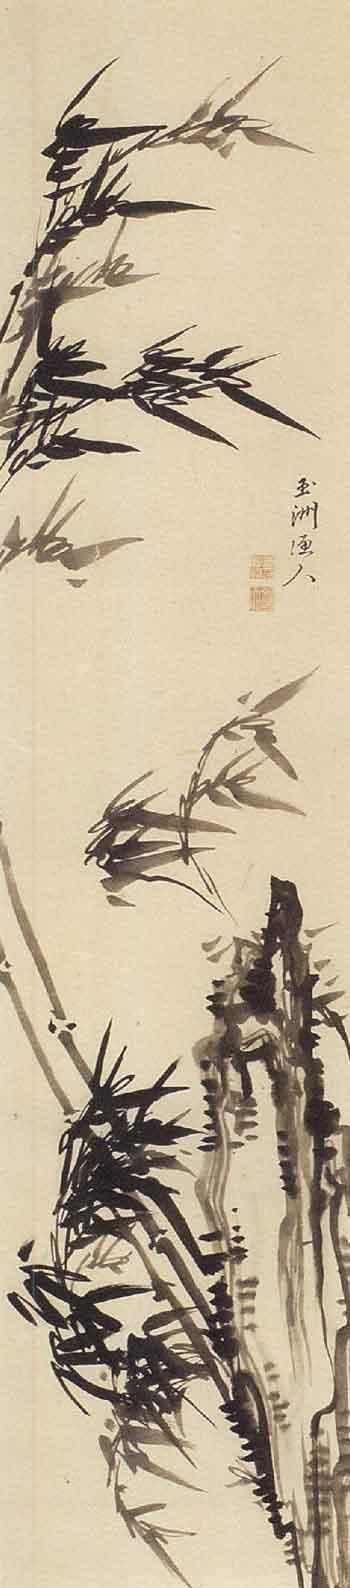 Chrysanthemum. Bamboo in wind by 
																			Kuwayama Gyokushu